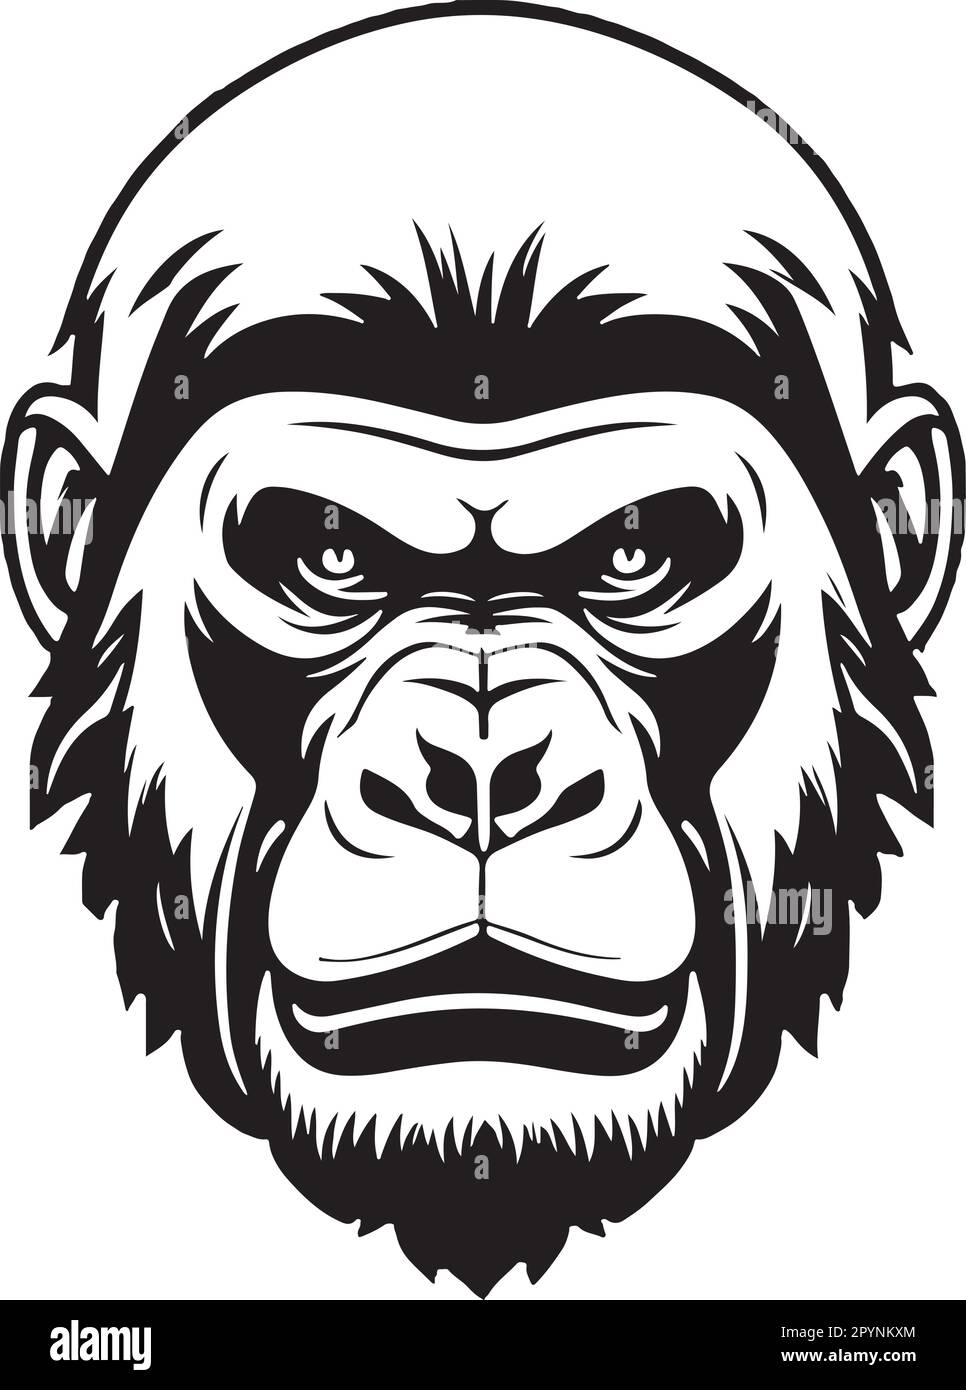 Pretty and powerful gorilla emblem art vector Stock Vector